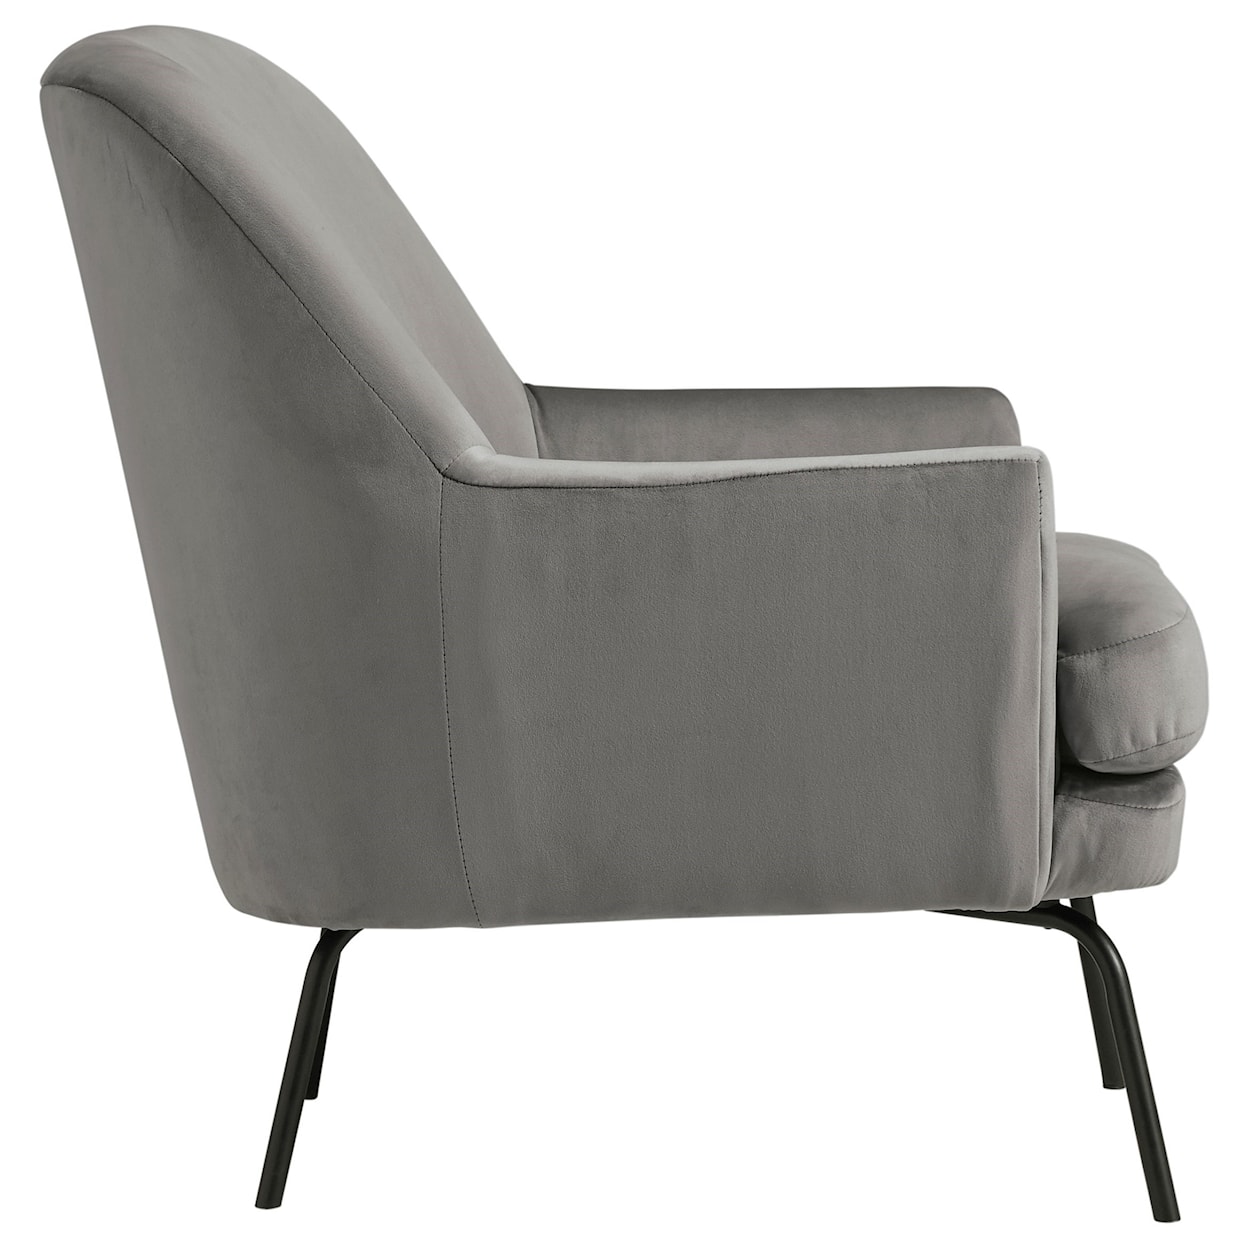 Ashley Furniture Signature Design Dericka Accent Chair